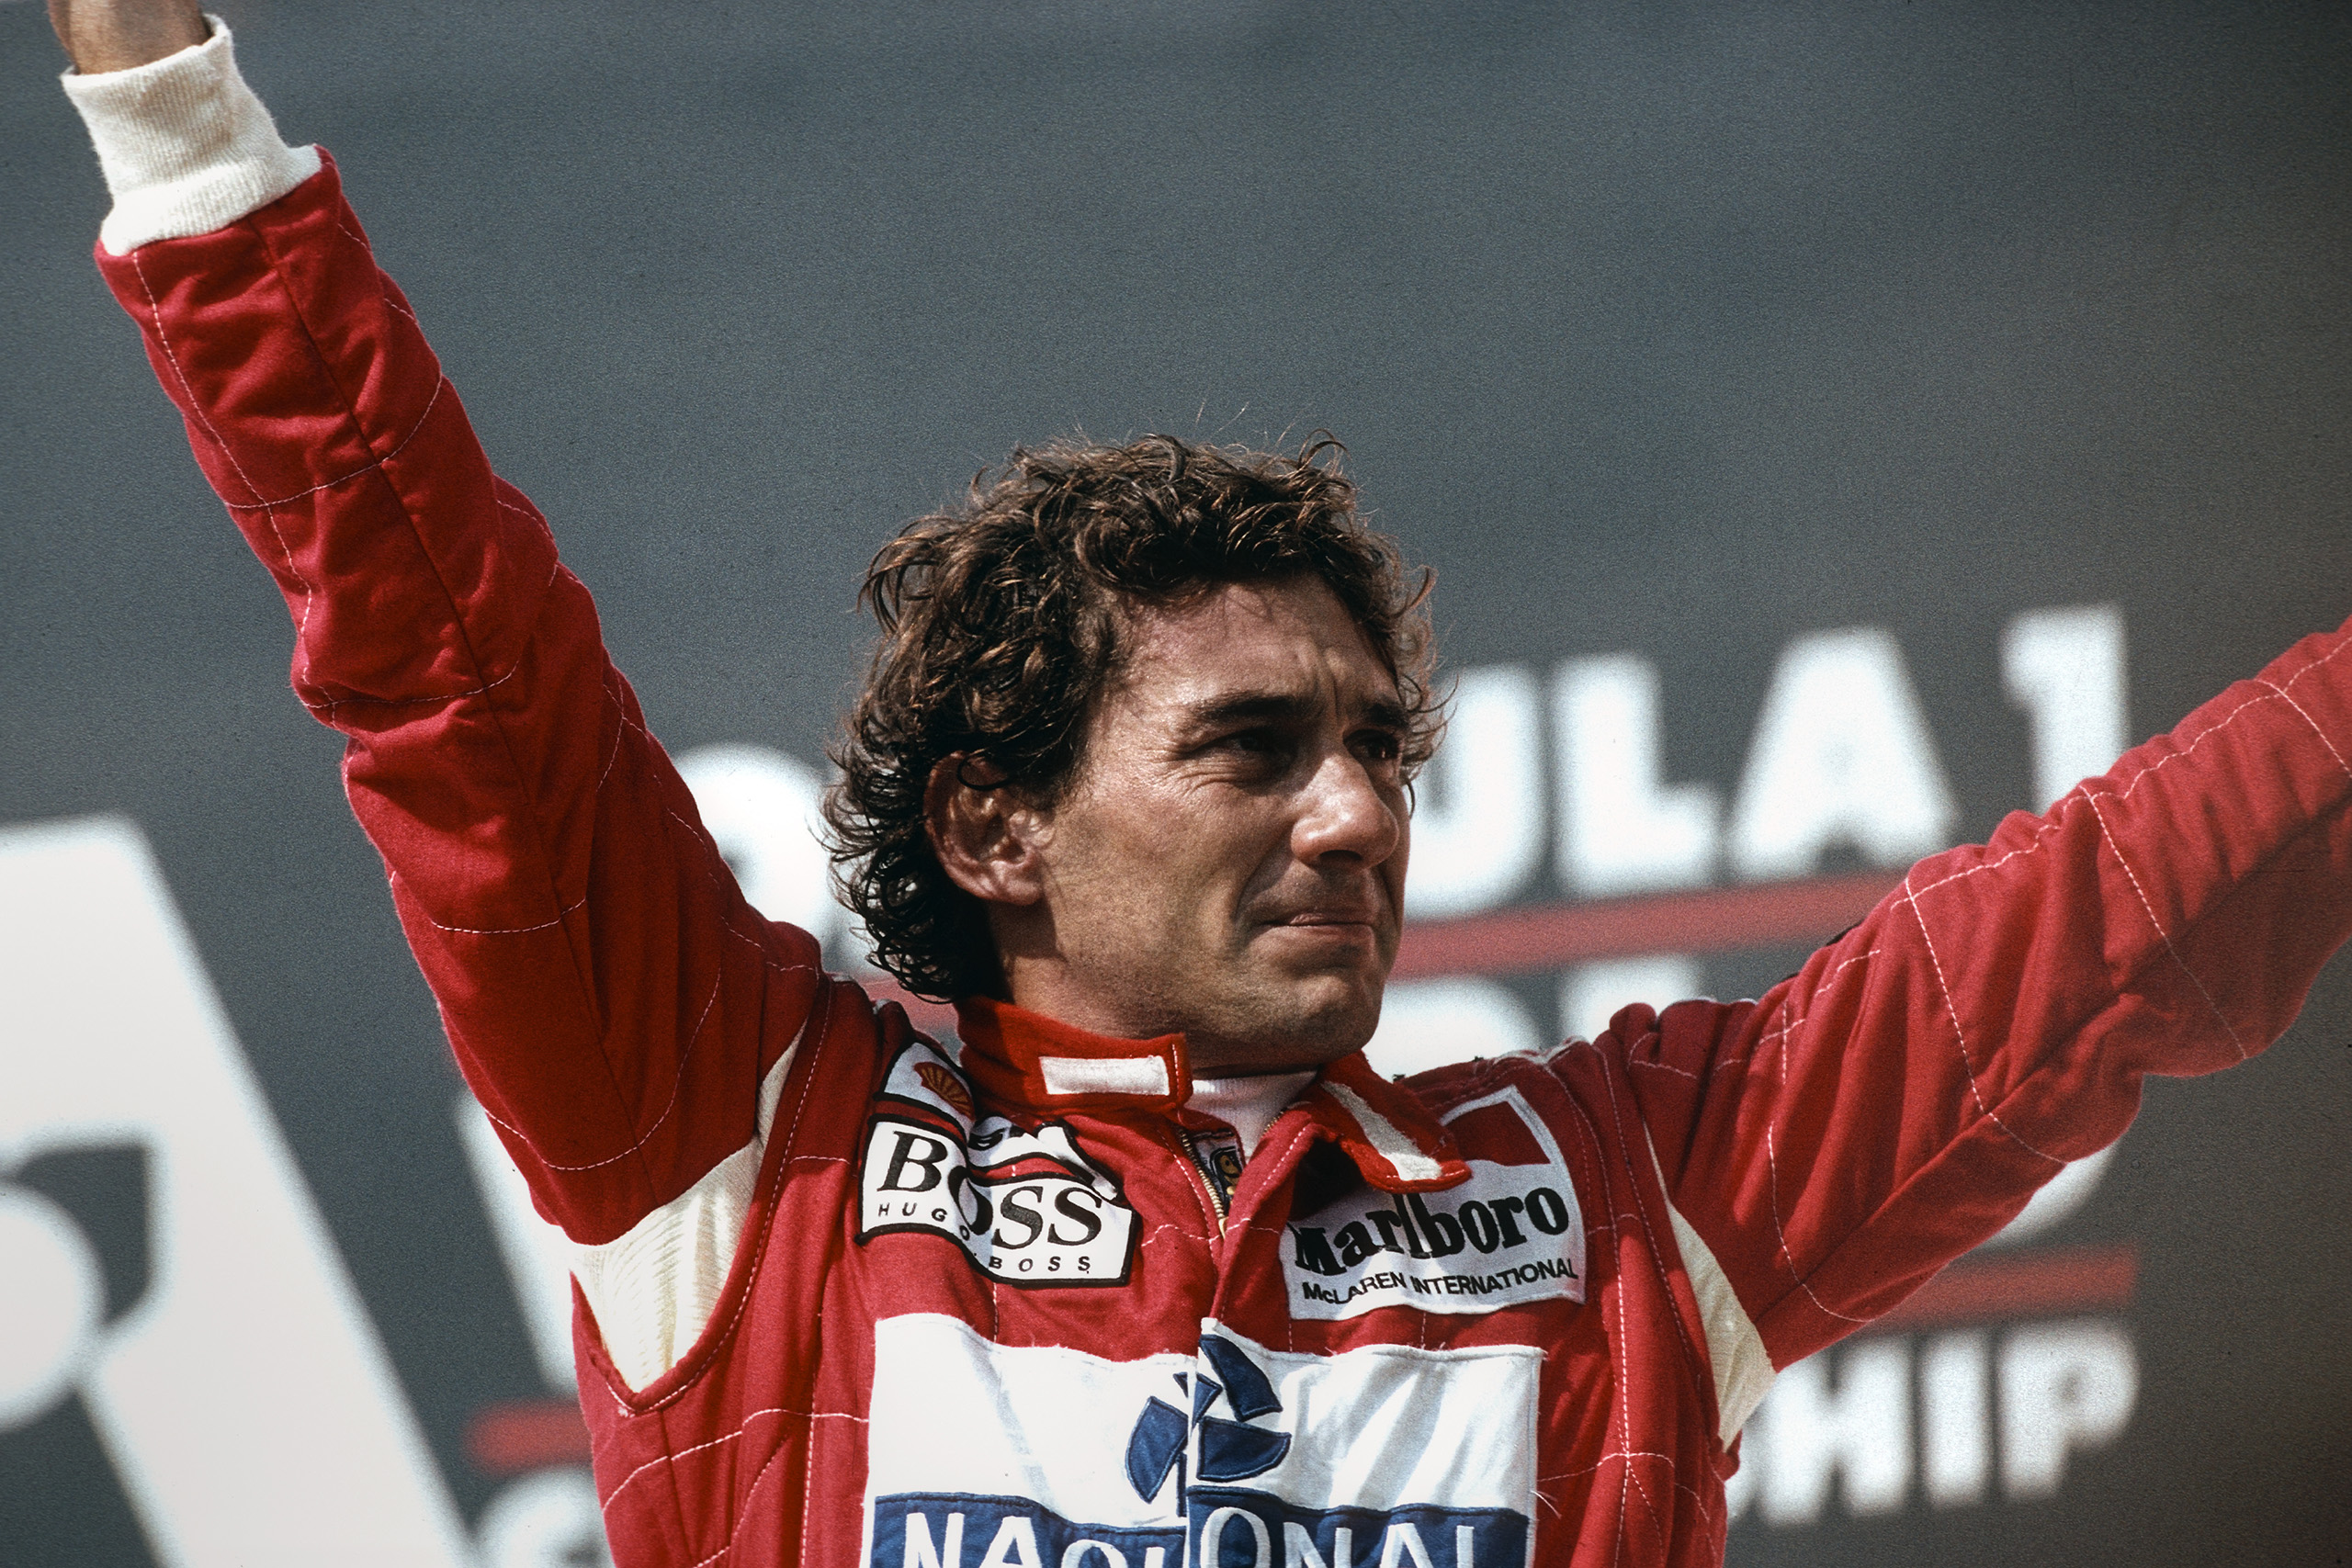 Senna celebrates following his victory at the 1993 Brazilian Grand Prix.